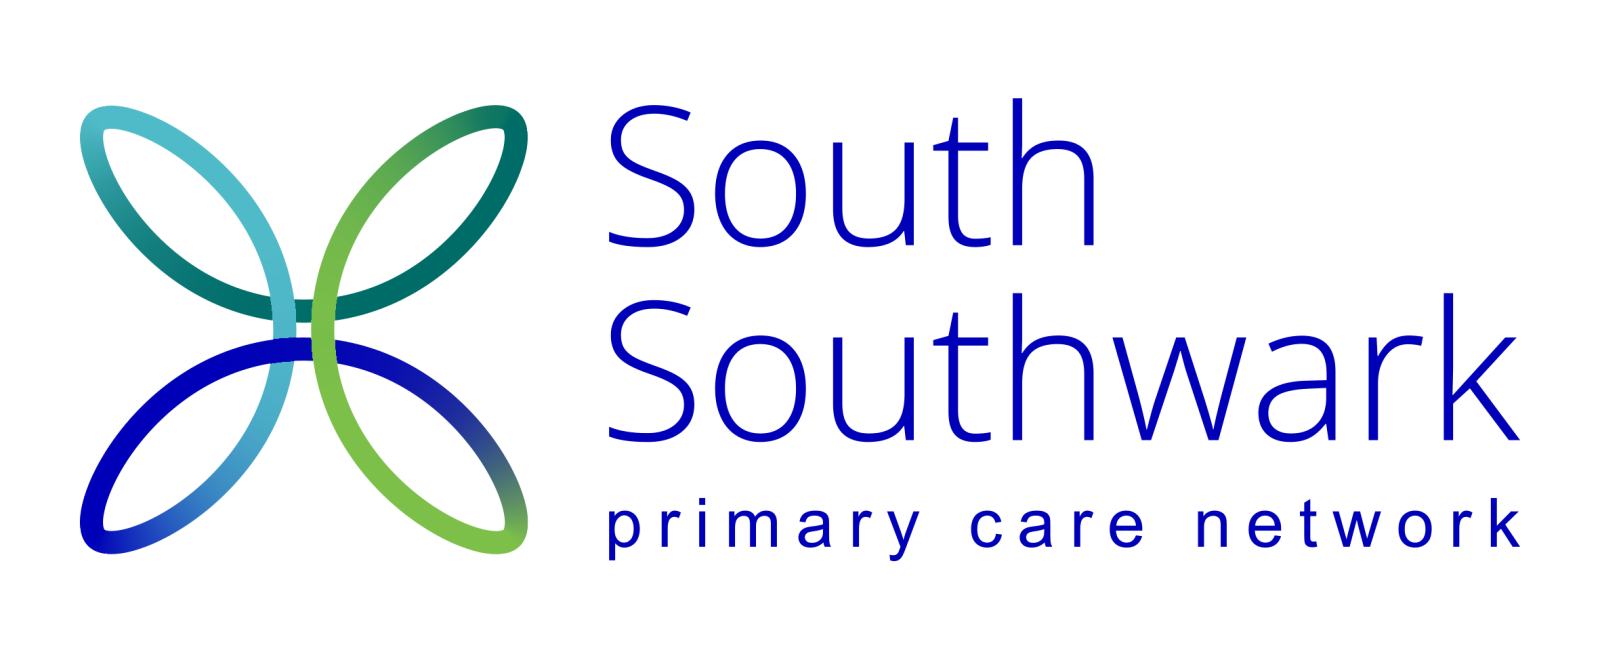 South Southwark PCN logo